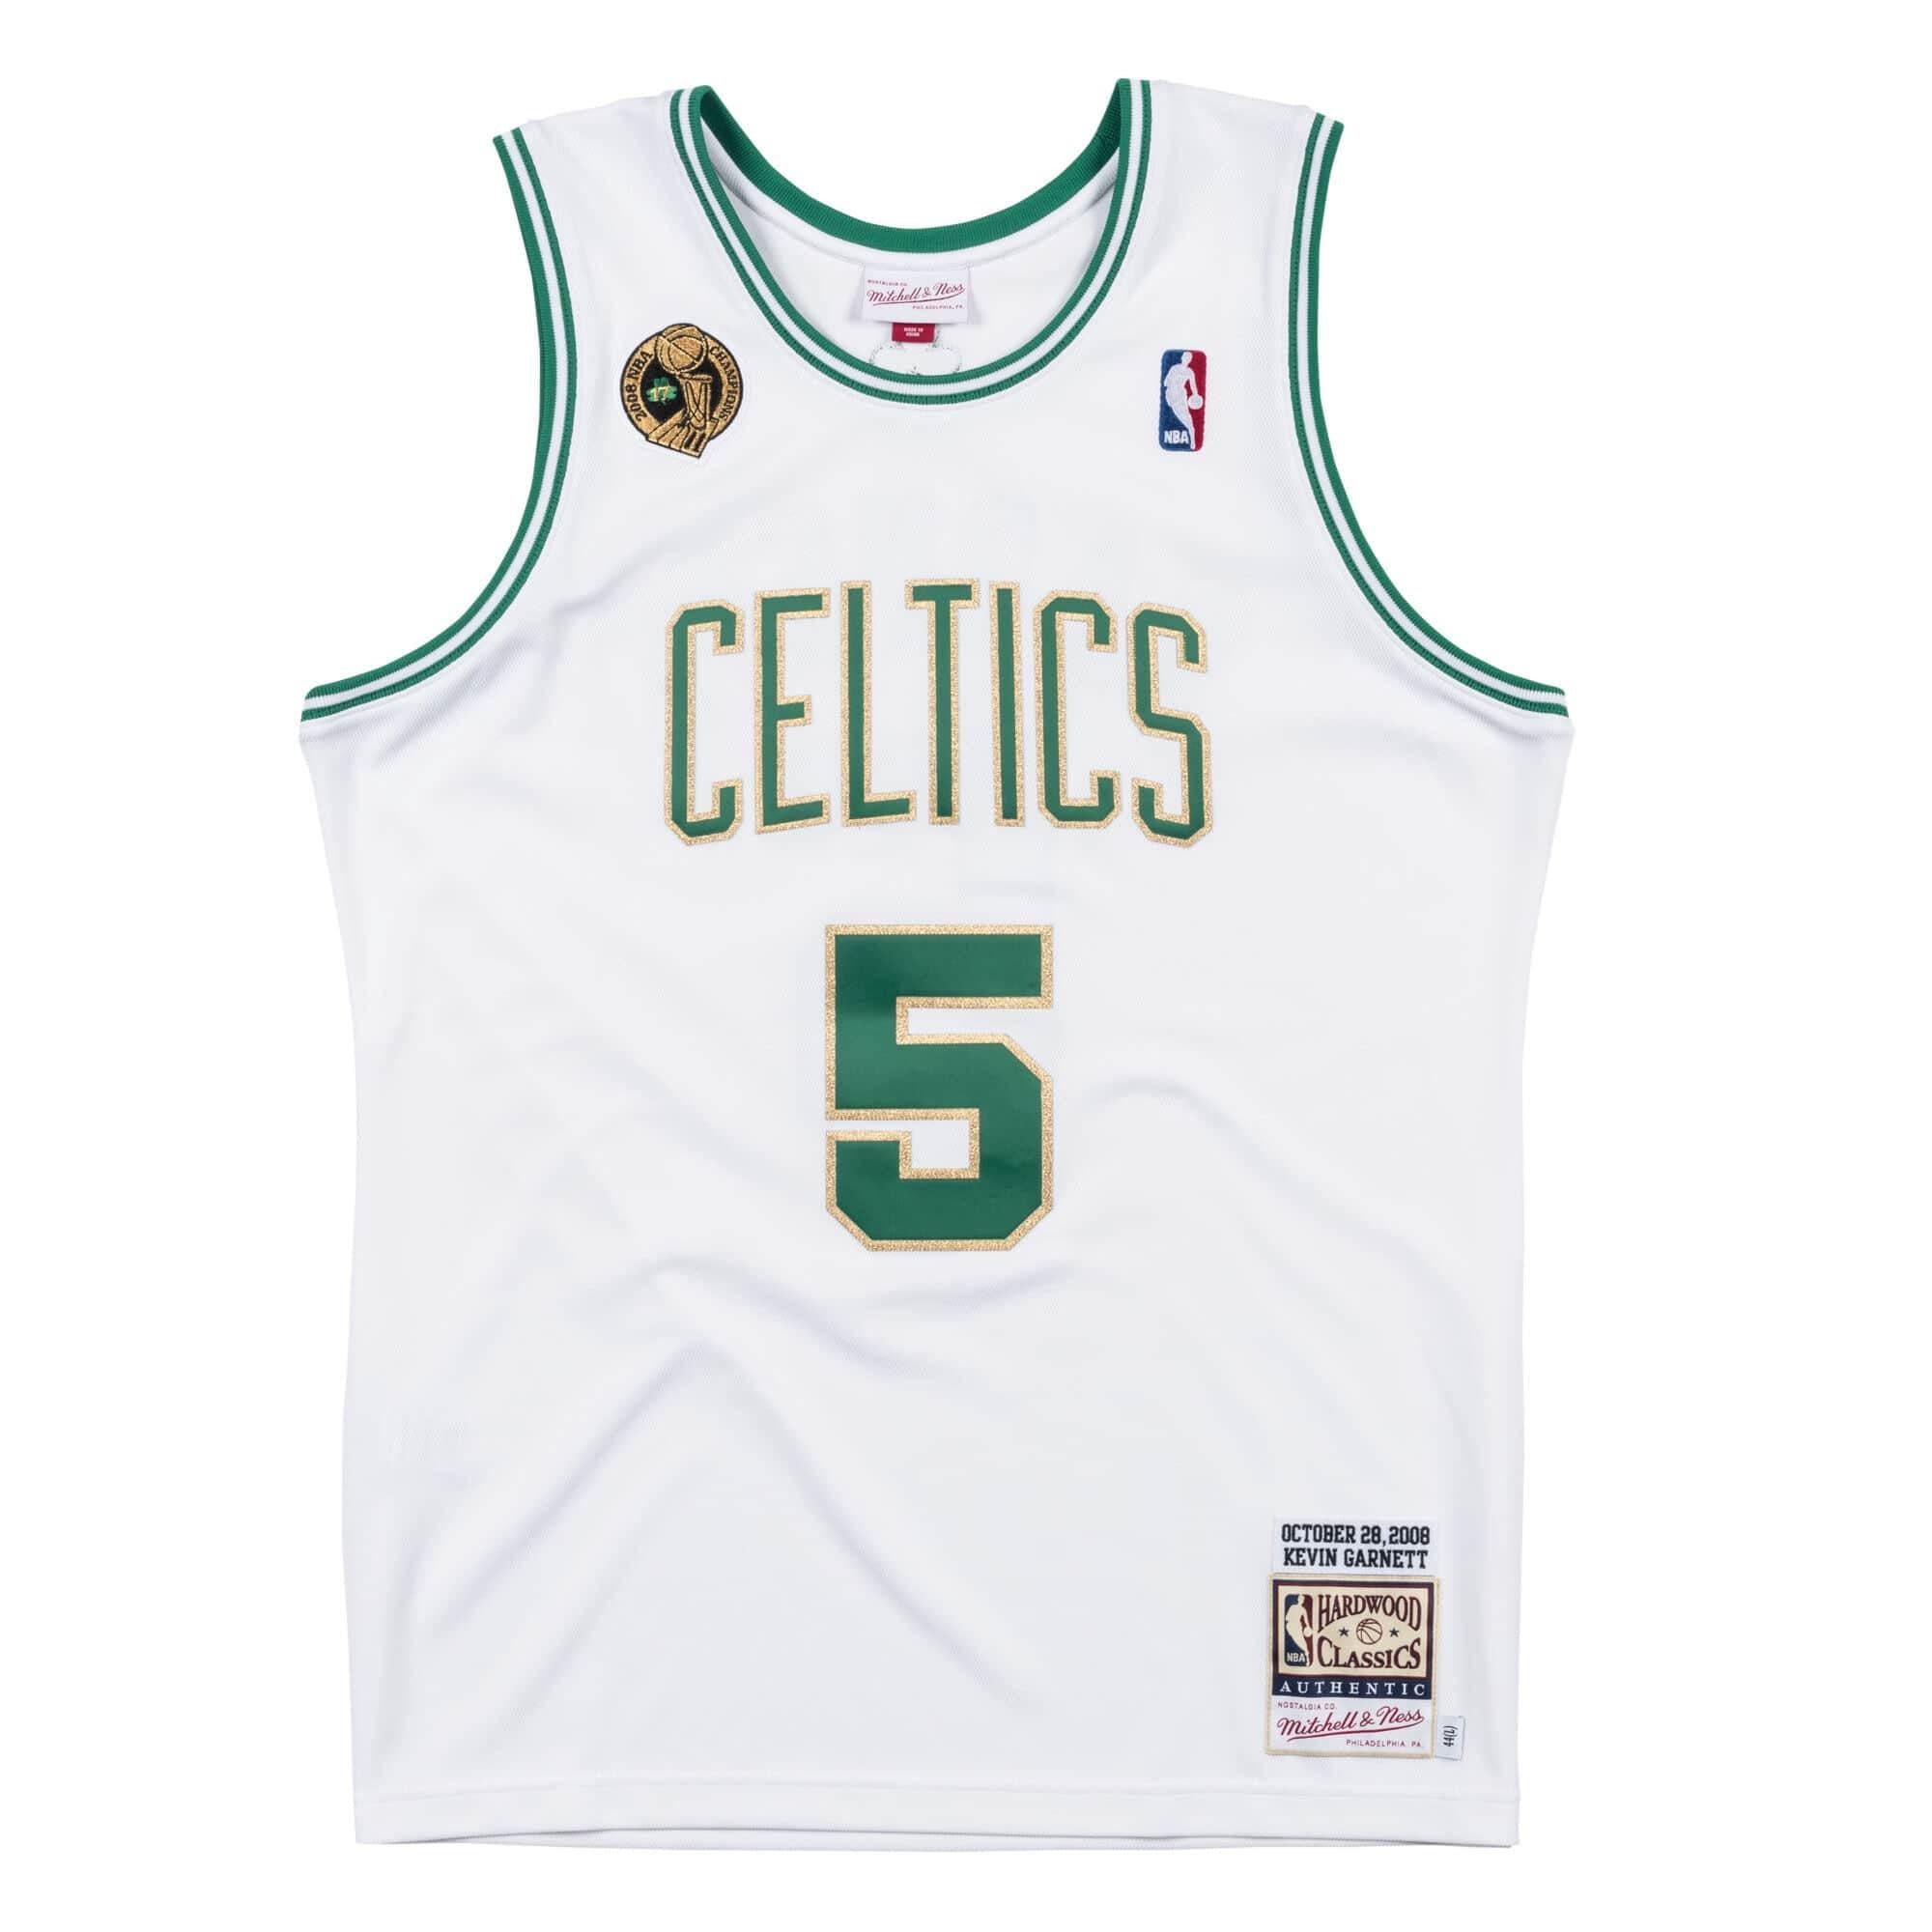 Boston Celtics Authentic Jerseys, Authentic Hardwood Classic